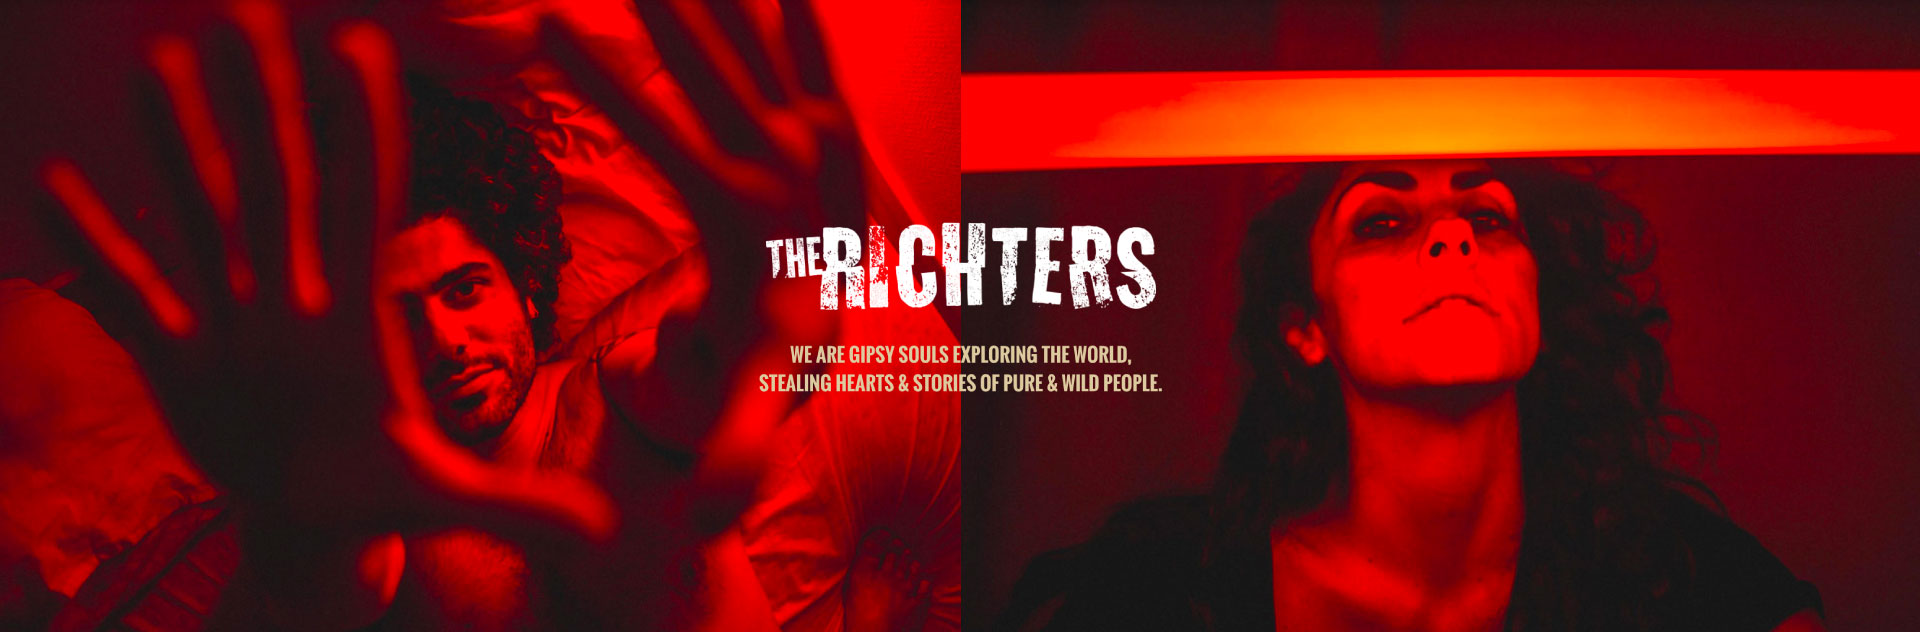 4-The-Richters-web-corporativa